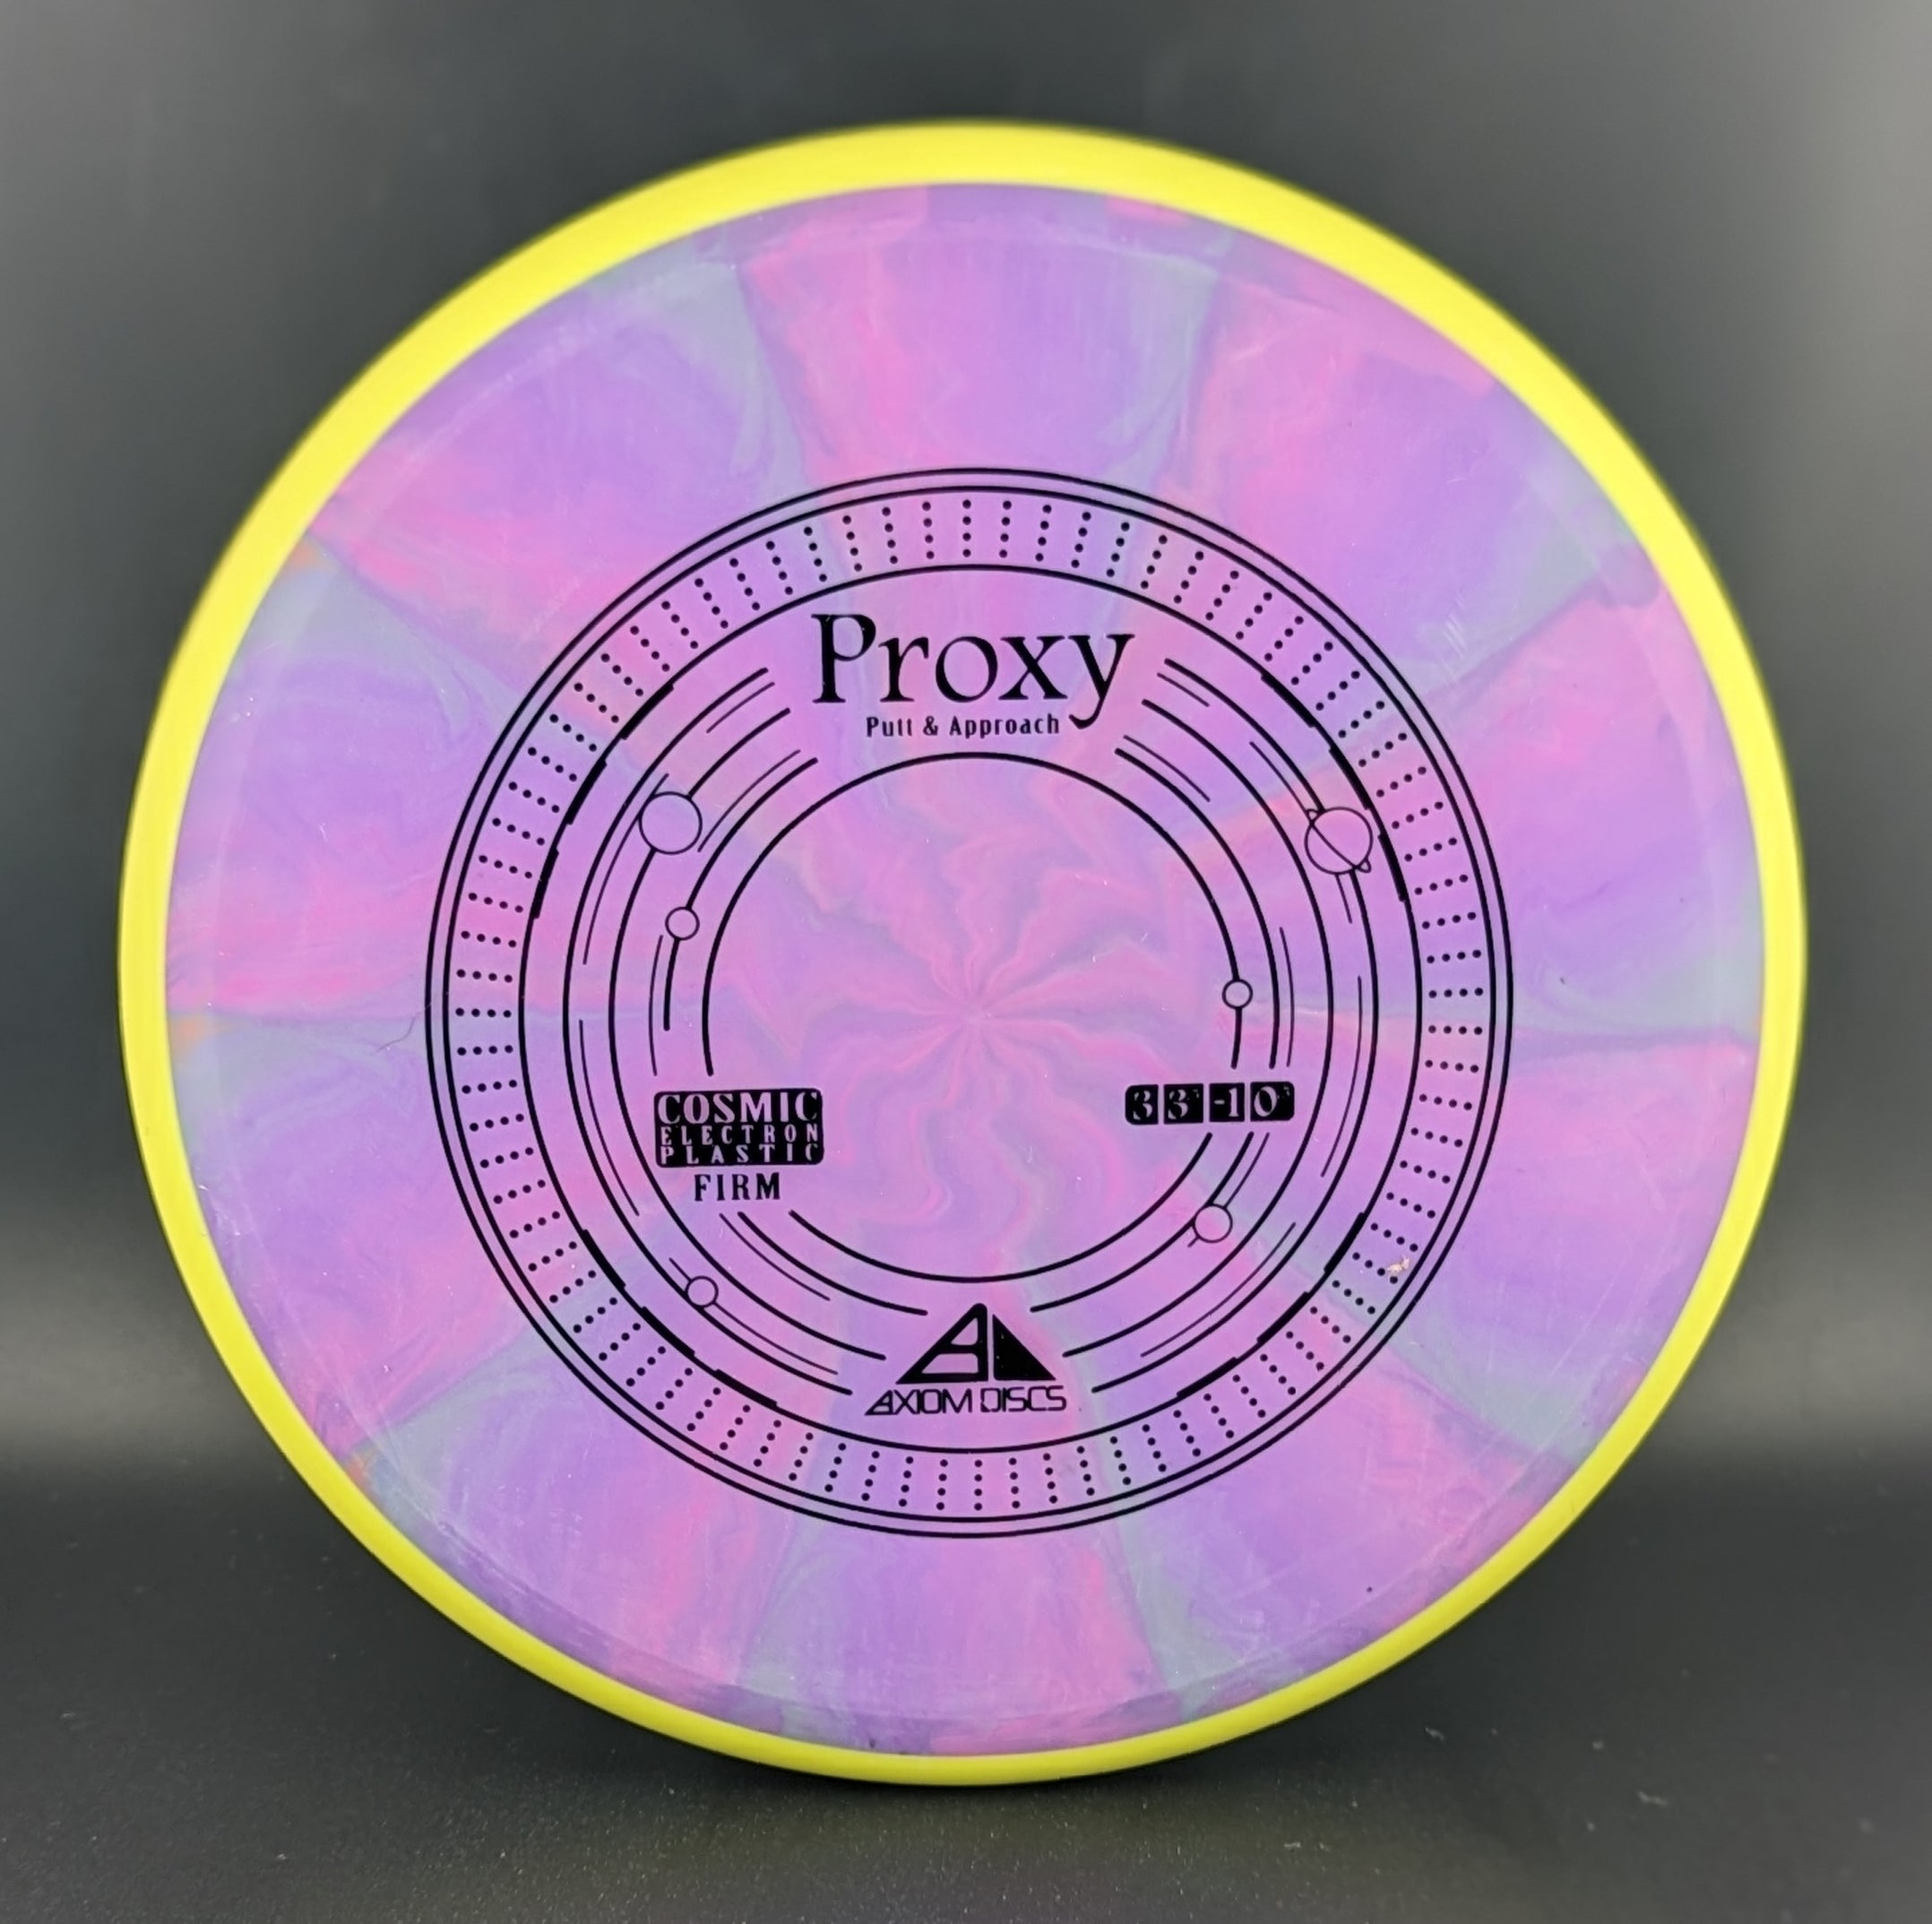 Axiom Cosmic Electron Proxy Firm